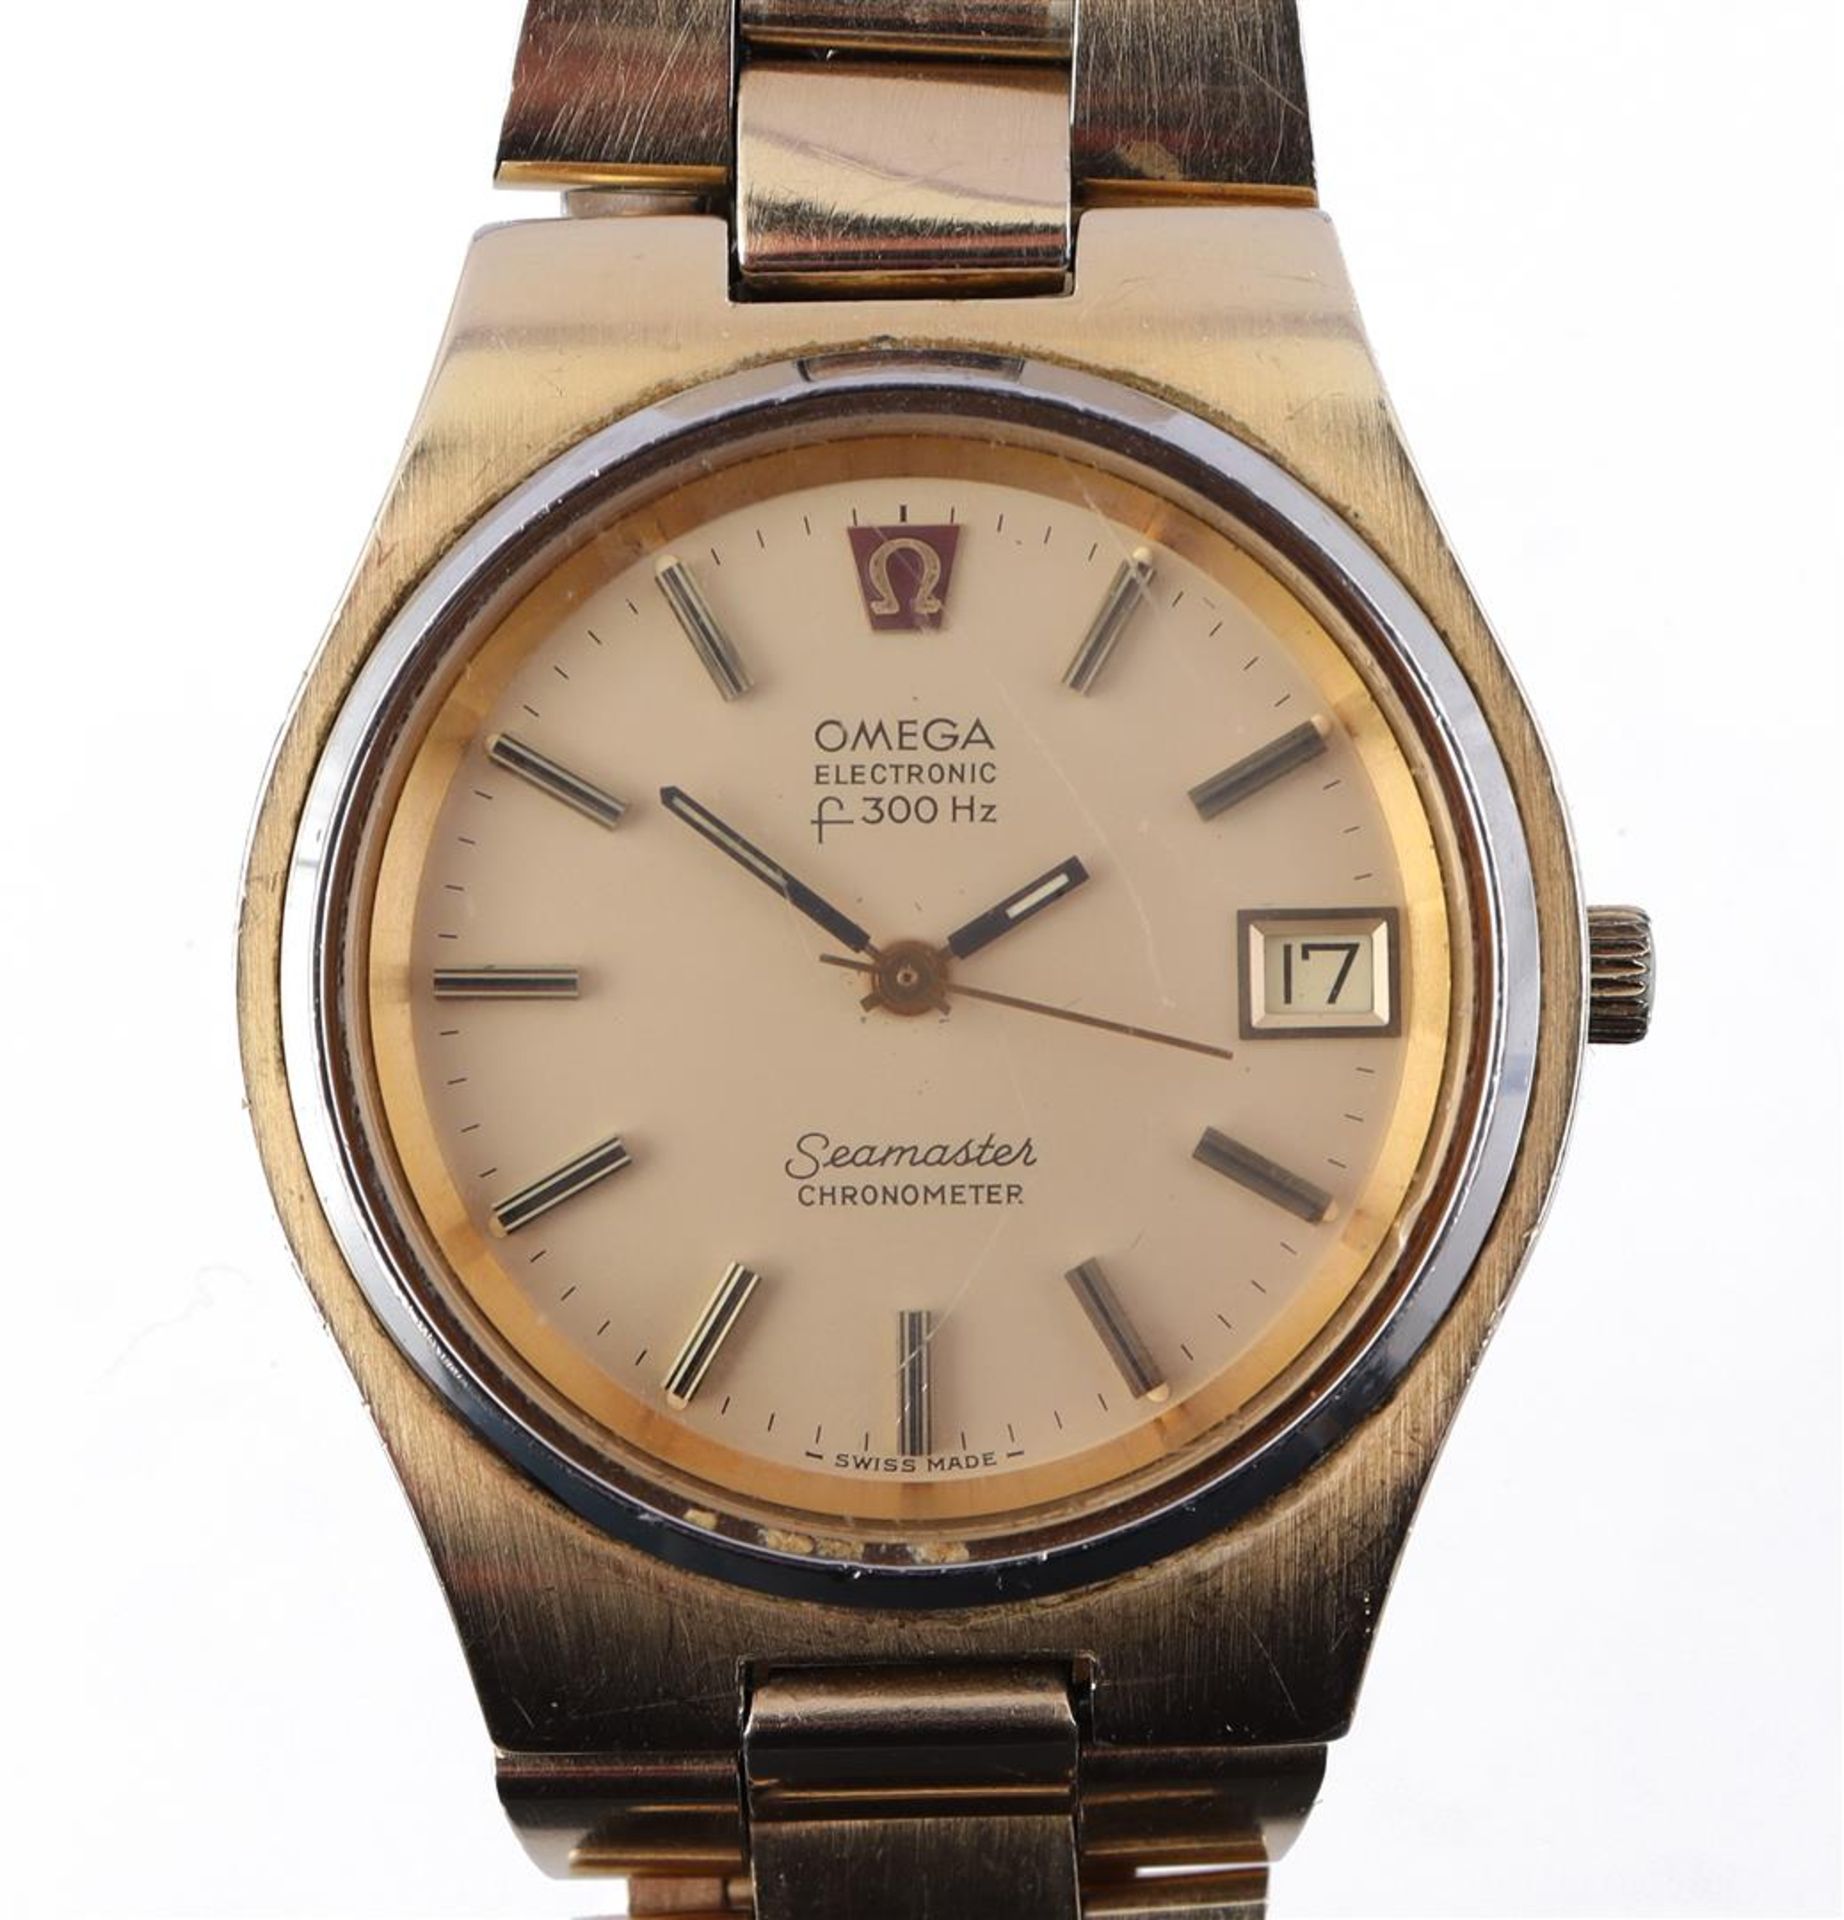 Omega Seamaster Electronic f300 HZ men's wristwatch